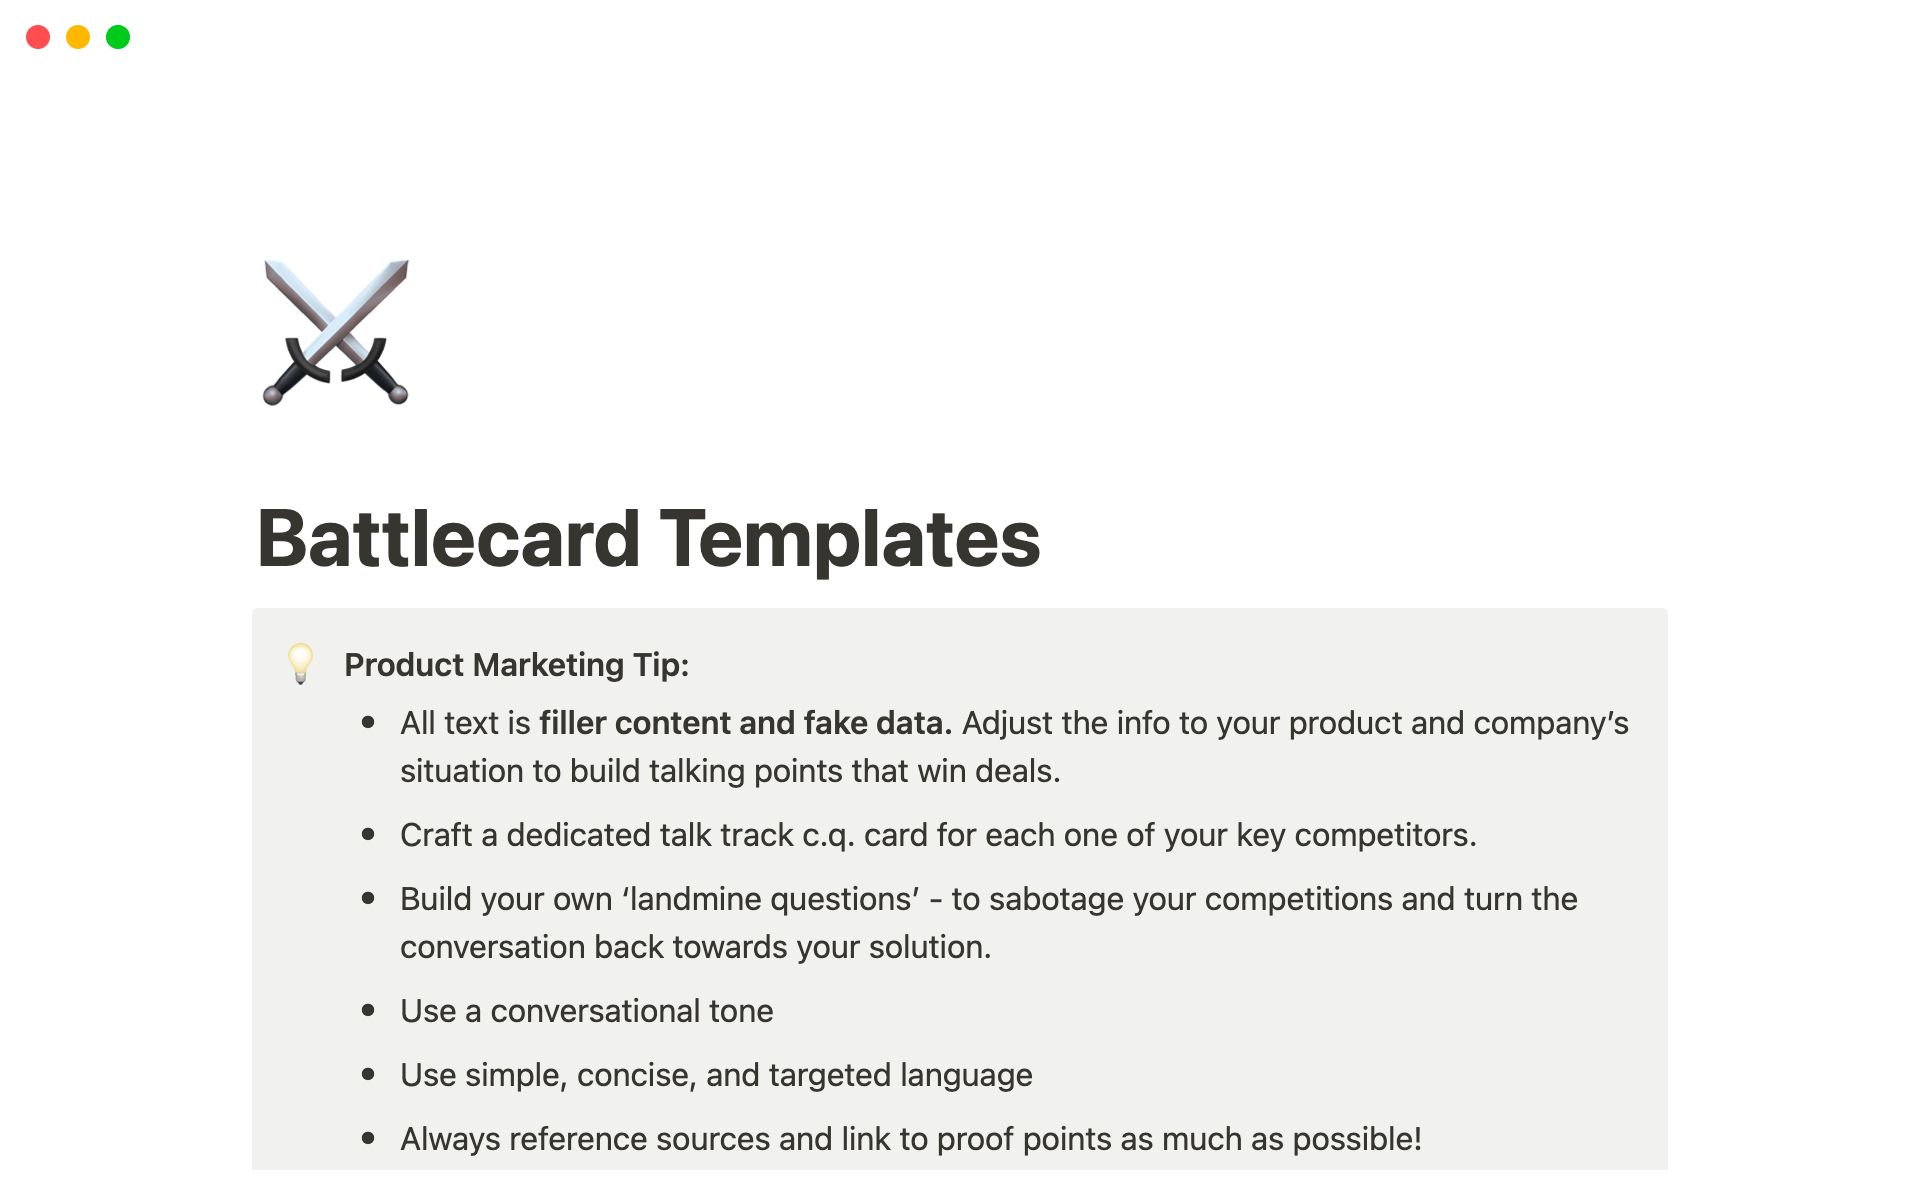 notion-battlecard-templates-stefanos-karakasis-desktop